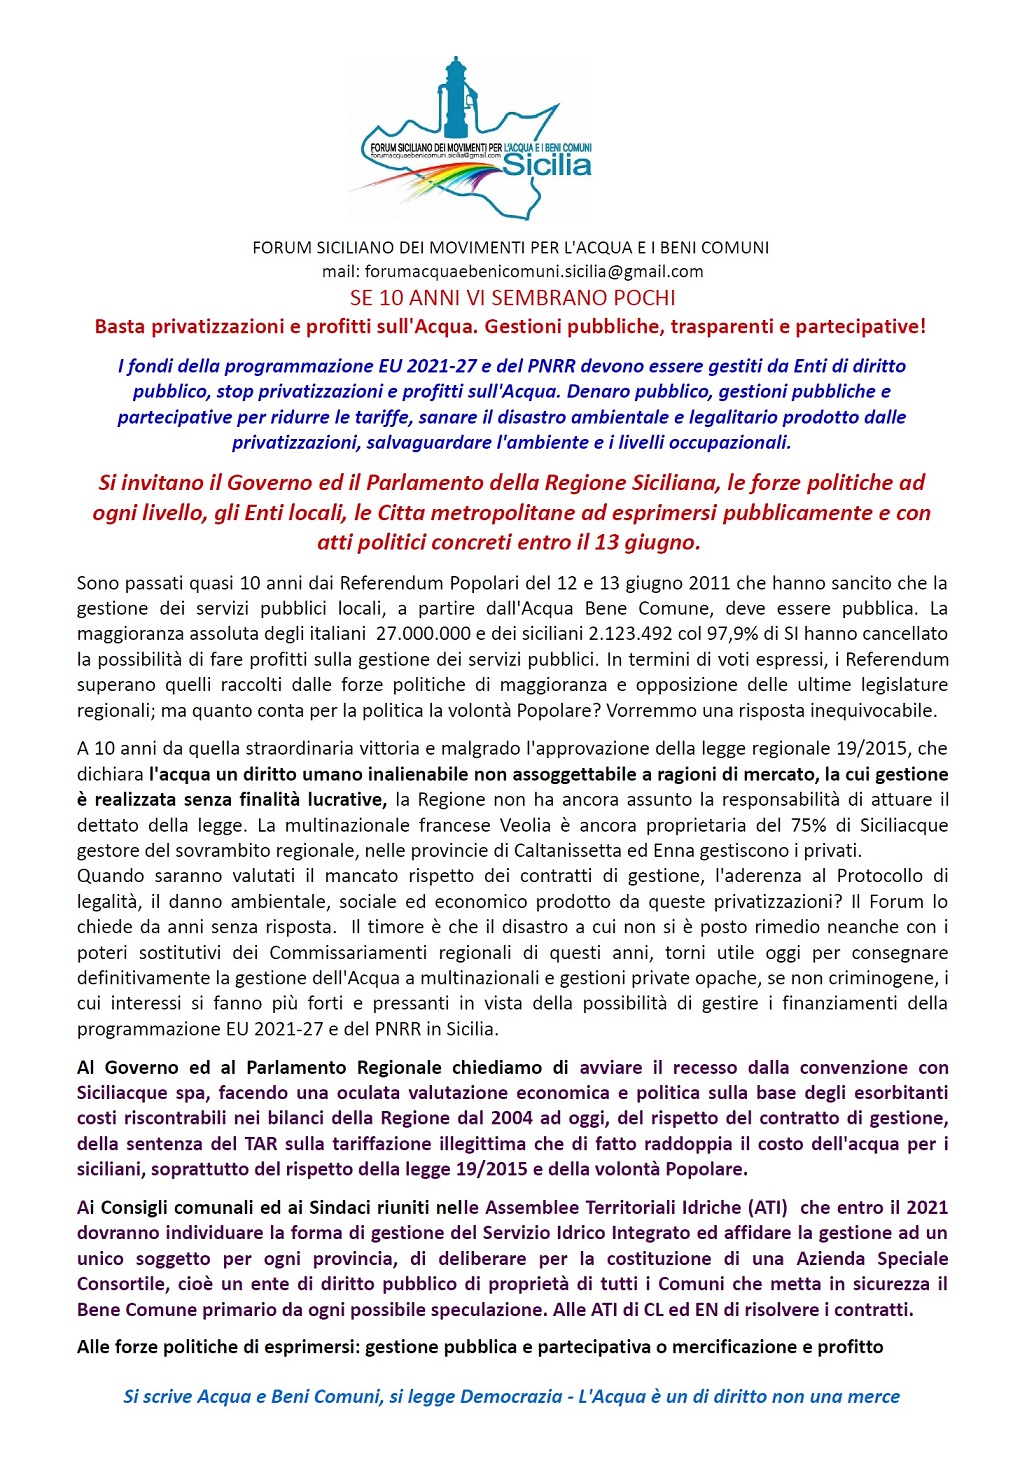 Appello Forum siciliano decennale referndum